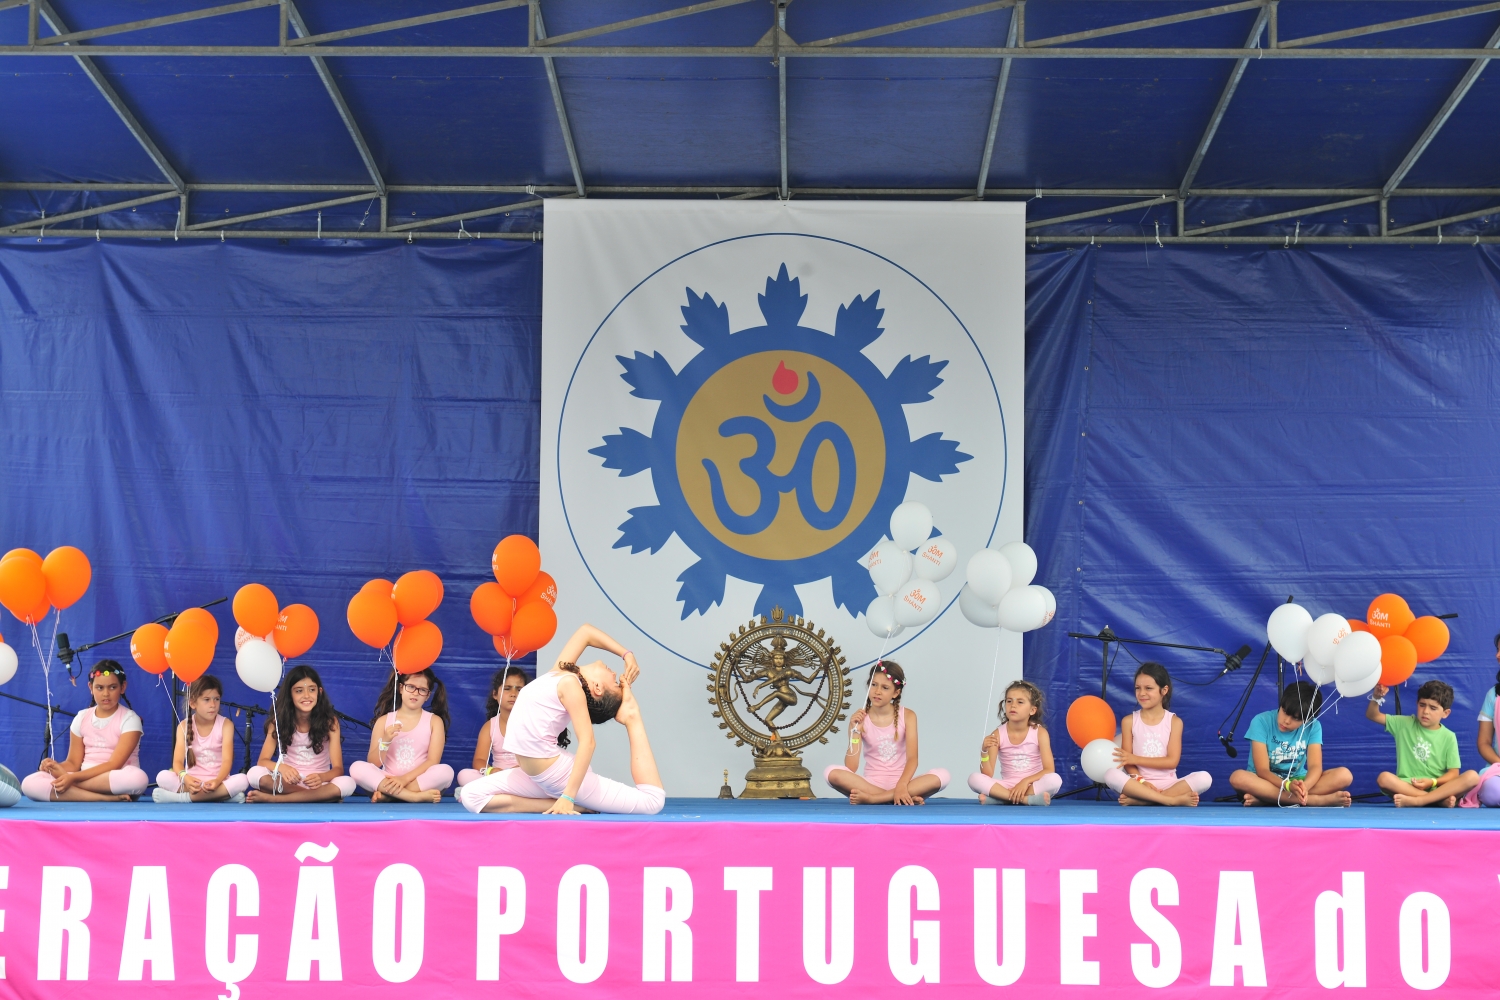 Commemoration of the International Day of Yoga - IDY - 2017 - Lisboa, Portugal